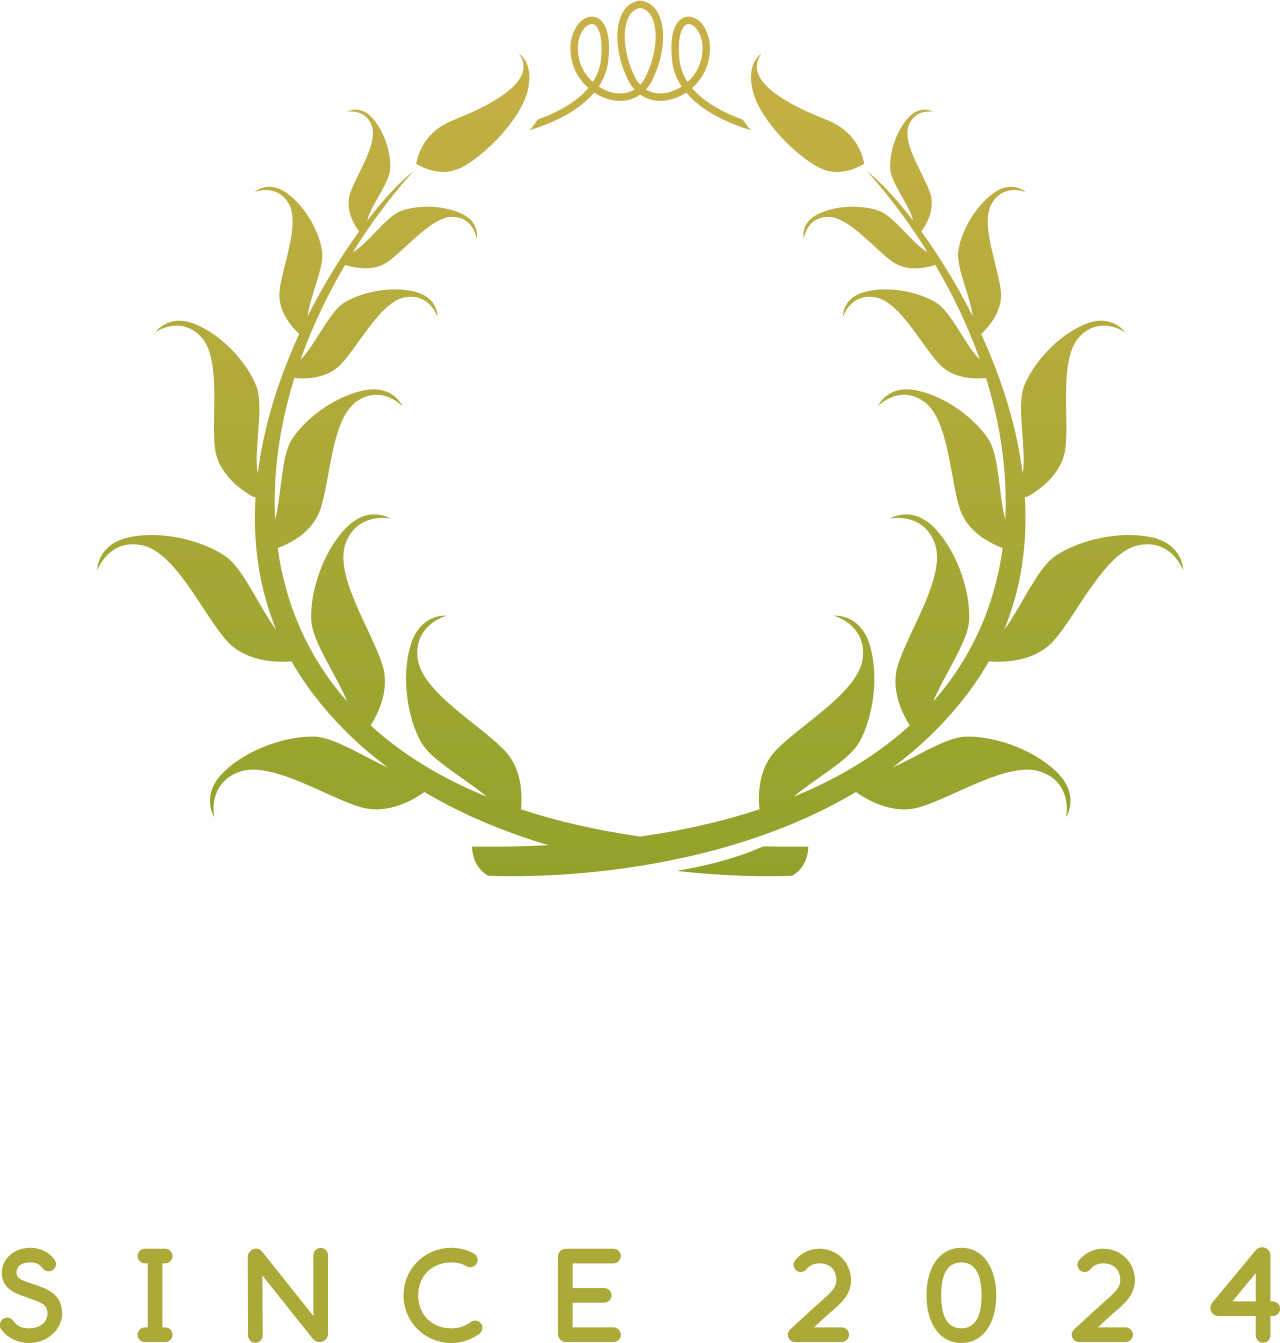 Dapper's logo